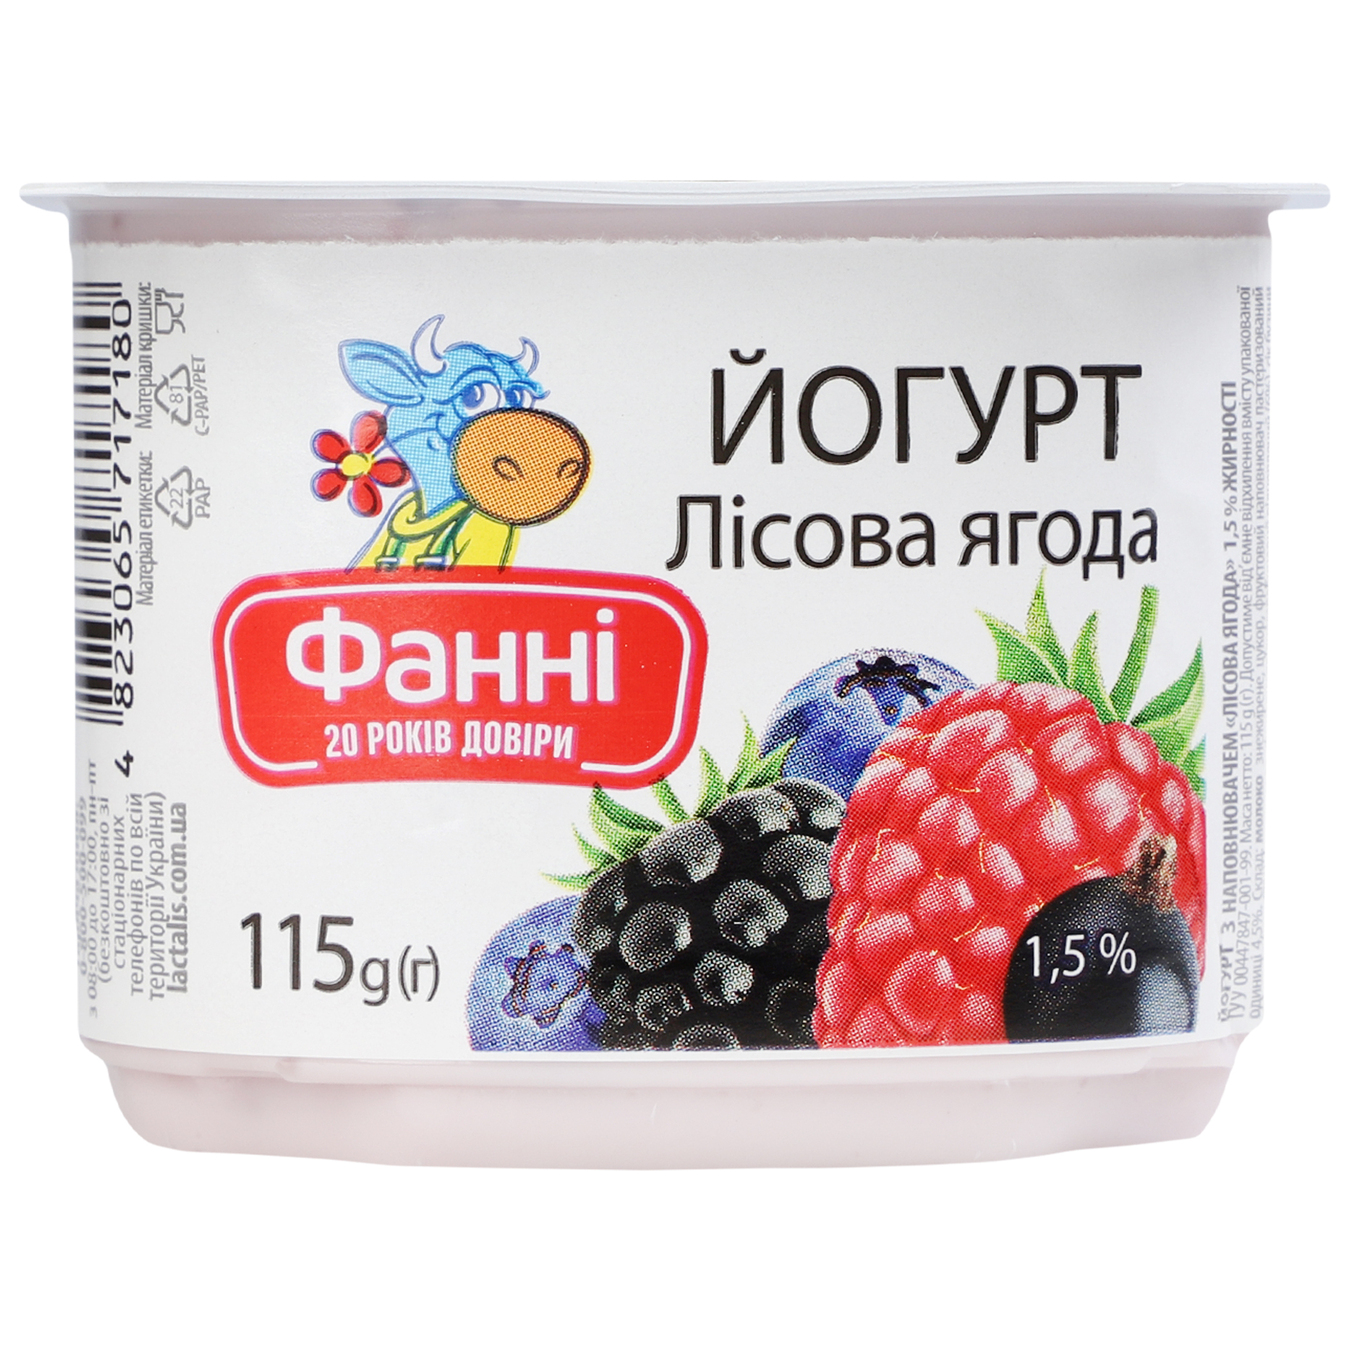 Йогурт Фанні з наповнювачем лісова ягода стаканчик 1,5% 115г